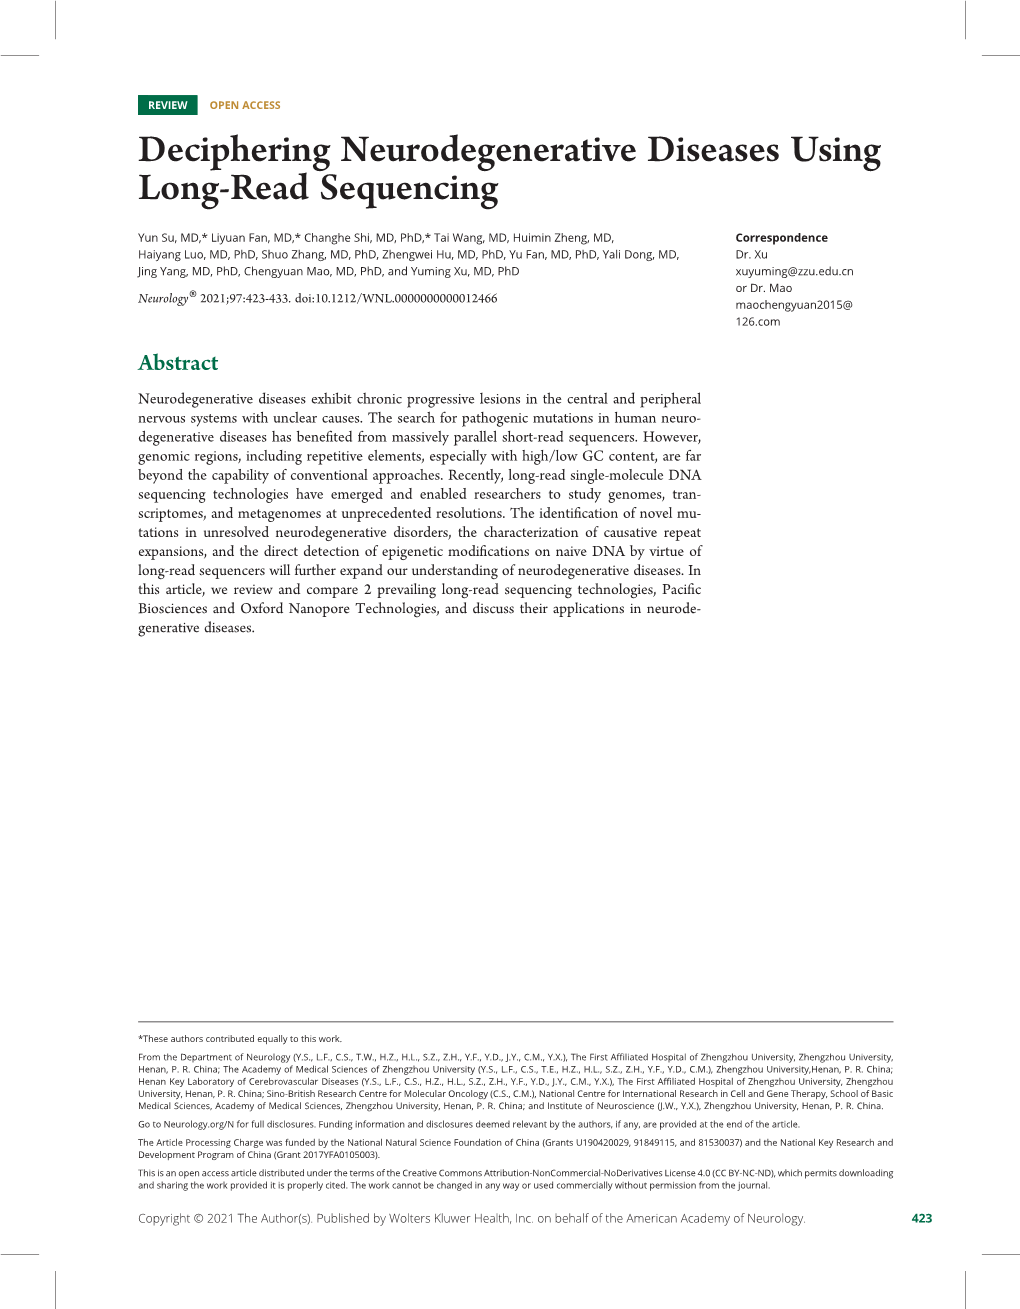 Deciphering Neurodegenerative Diseases Using Long-Read Sequencing